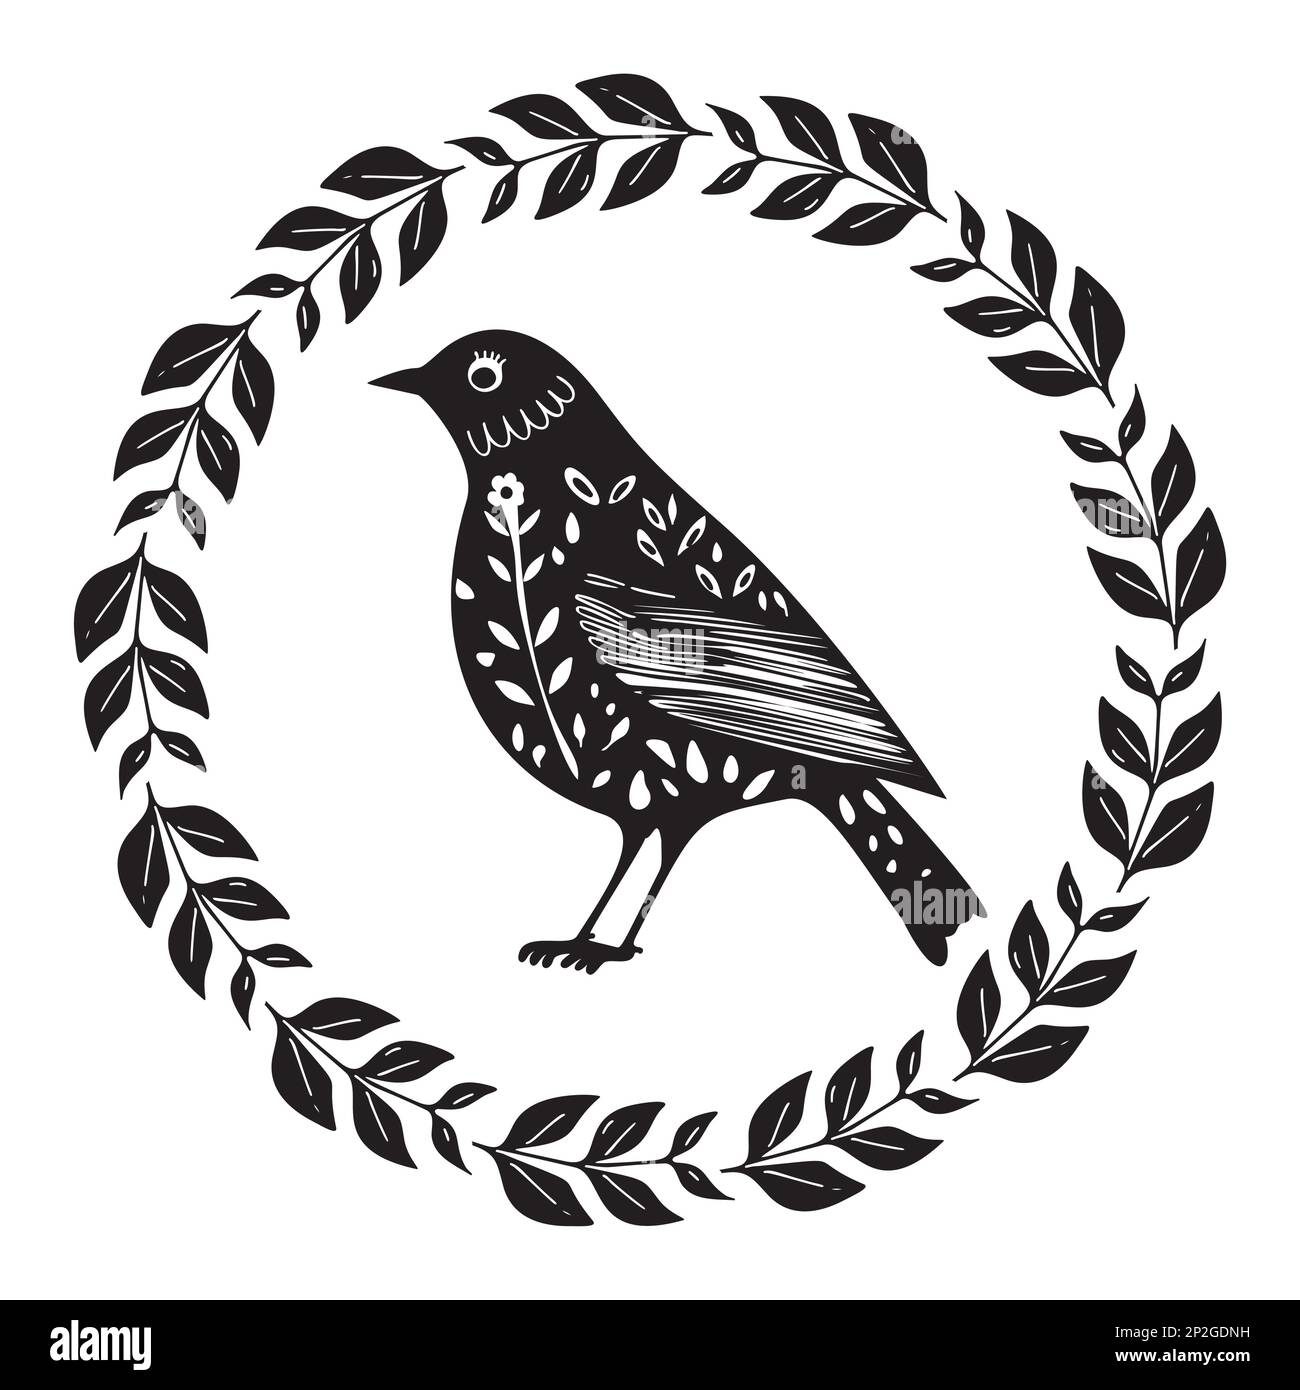 Cute bird vector icon in wreath. Low brow wildlife motif in scnadi style.  Stock Vector